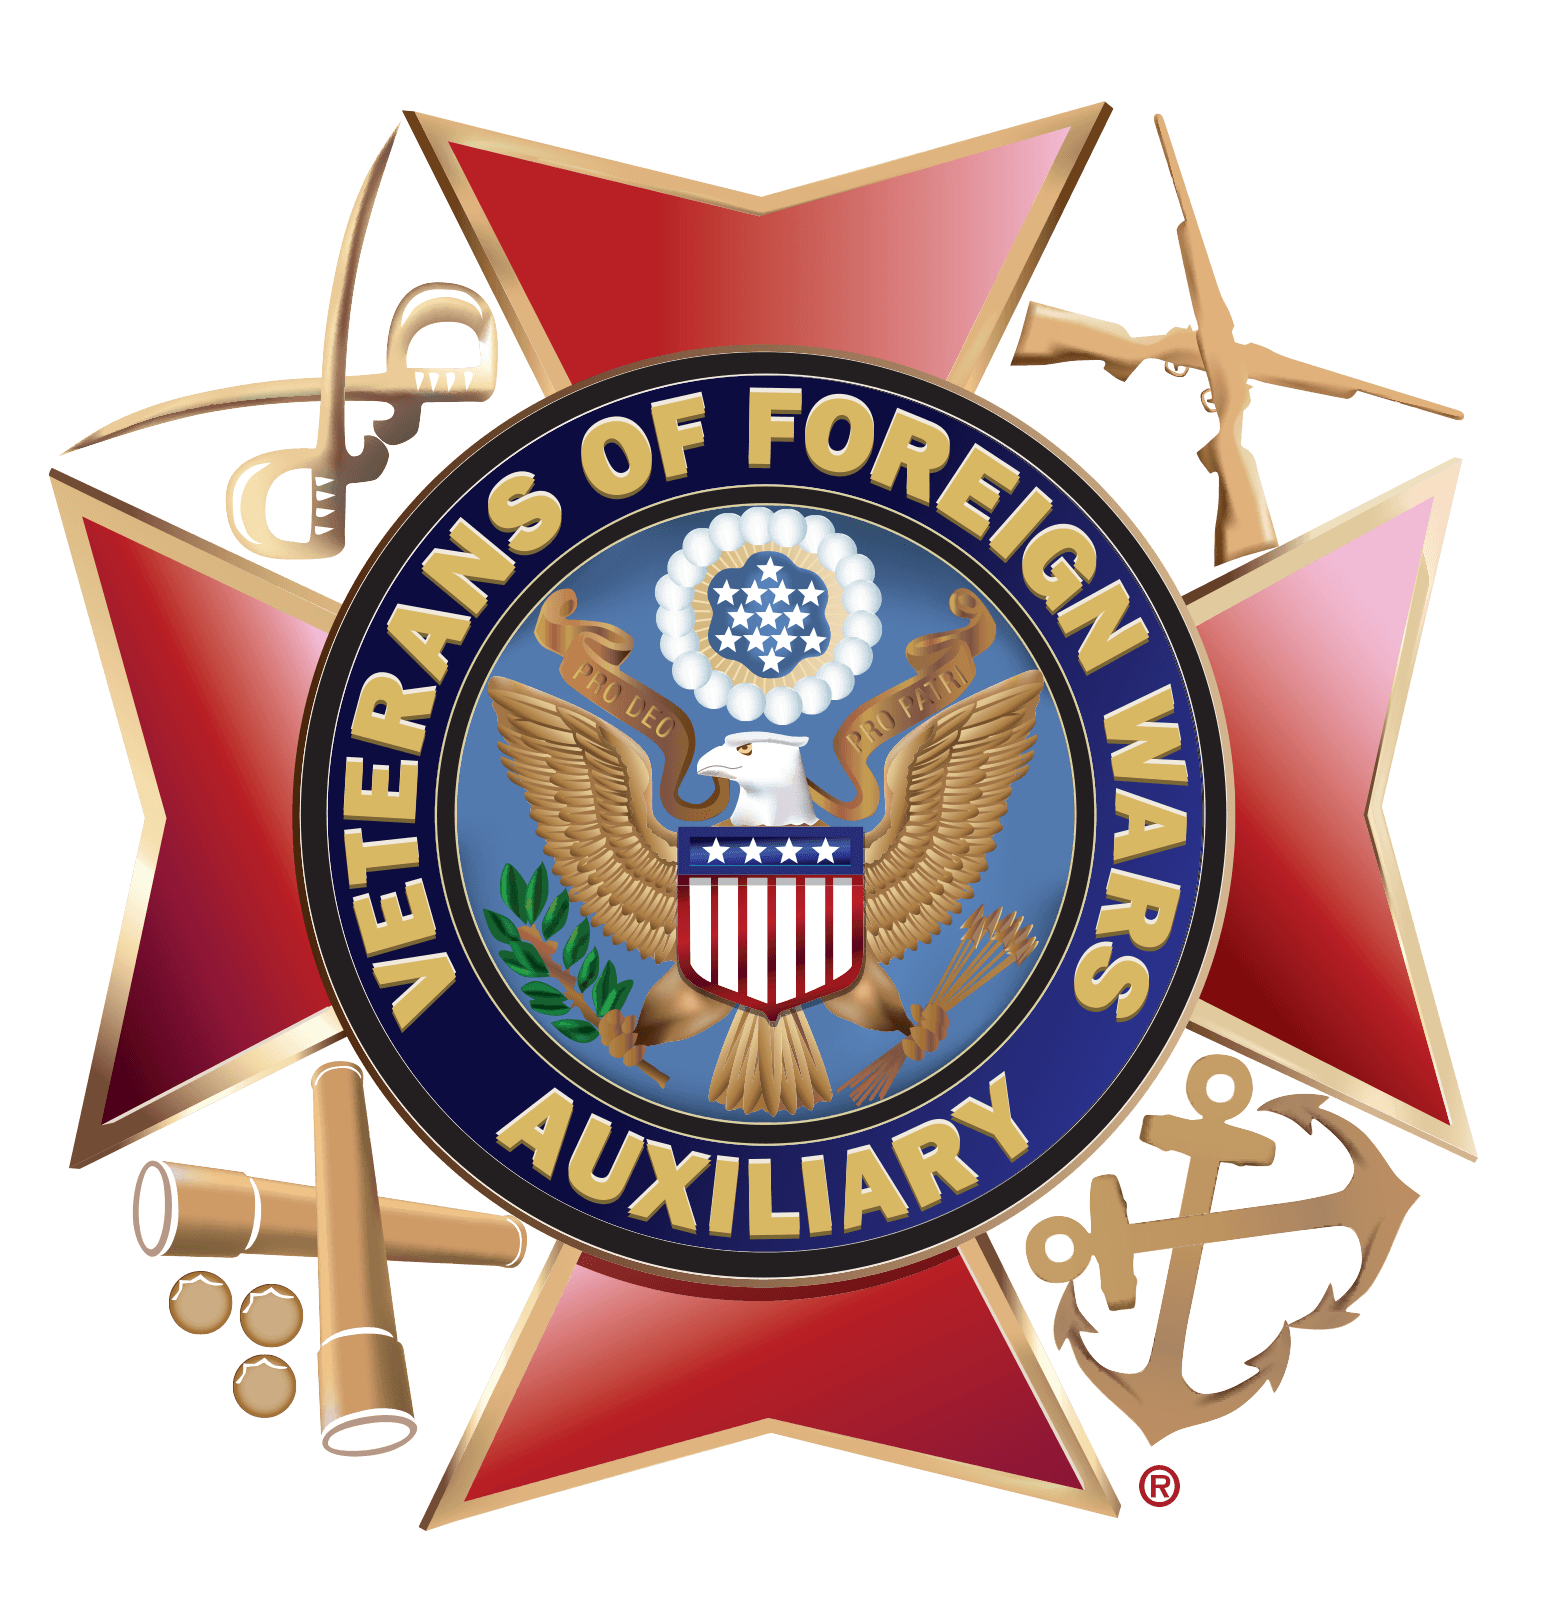 VFW Logo - Emblem Branding Center - VFW Auxiliary National Organization